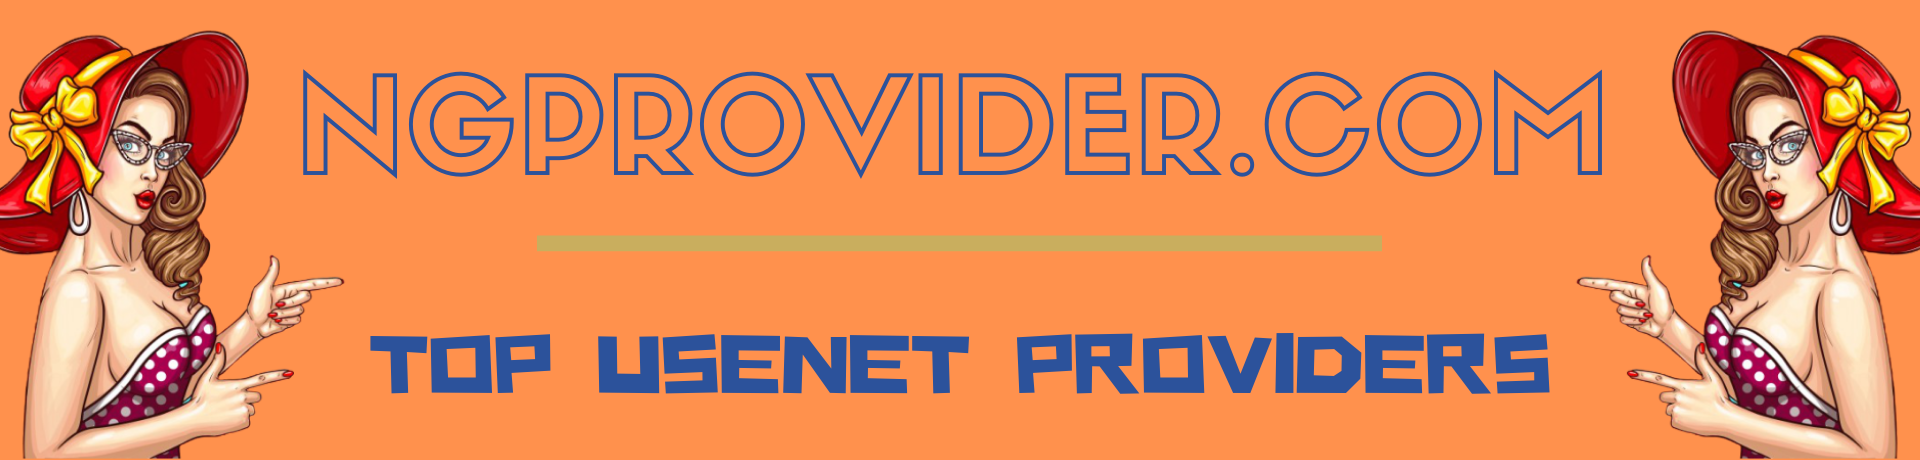 TOP Usenet Providers